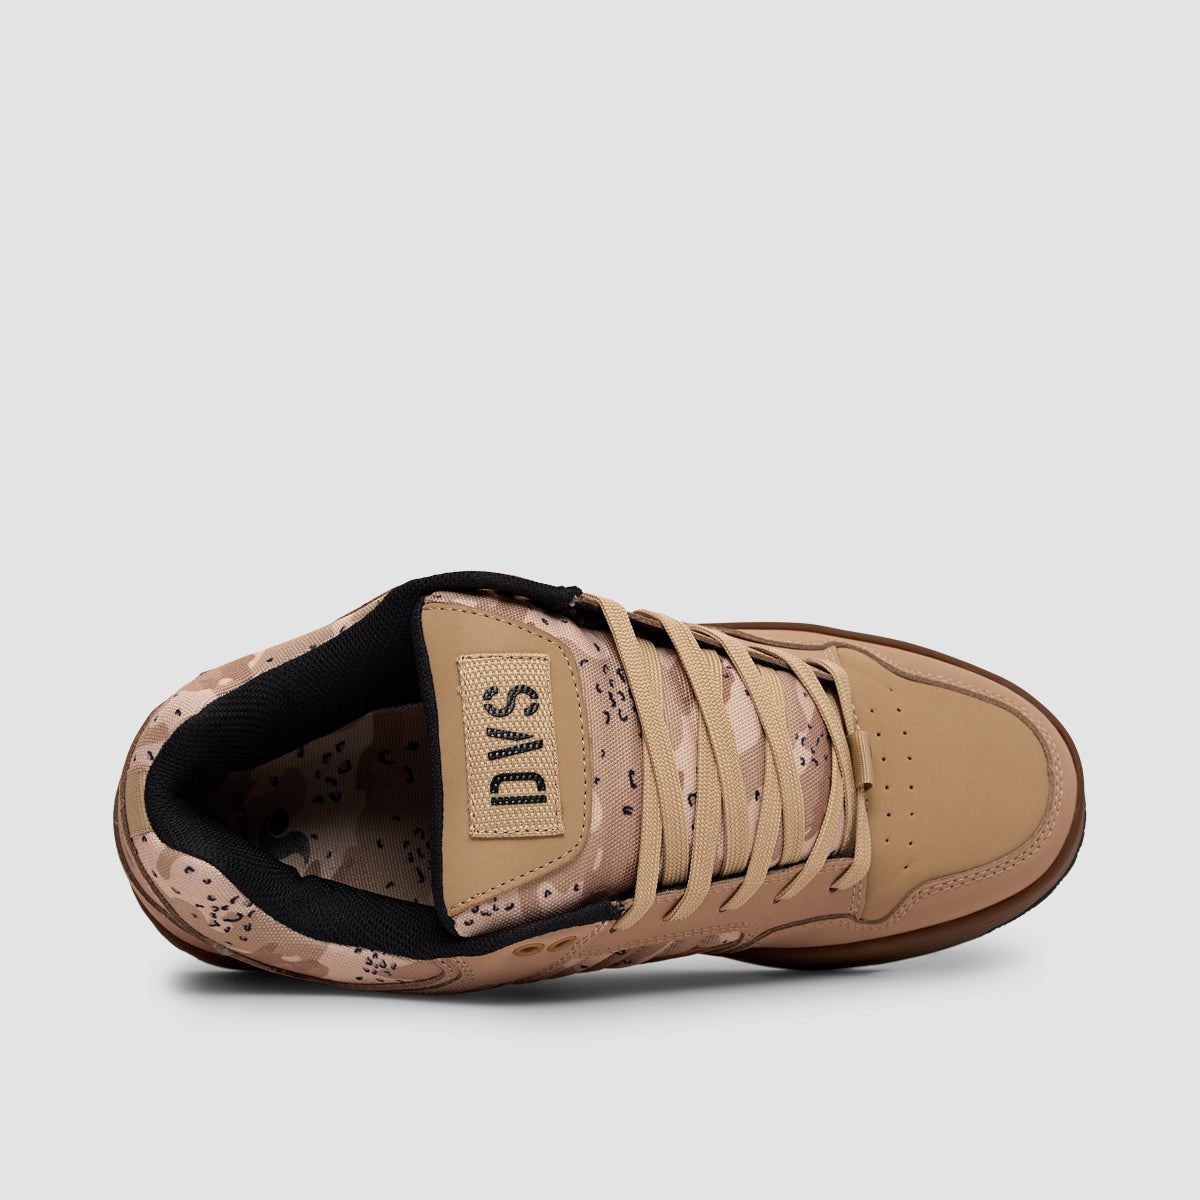 DVS Enduro 125 Shoes - Tan/Camo Nubuck